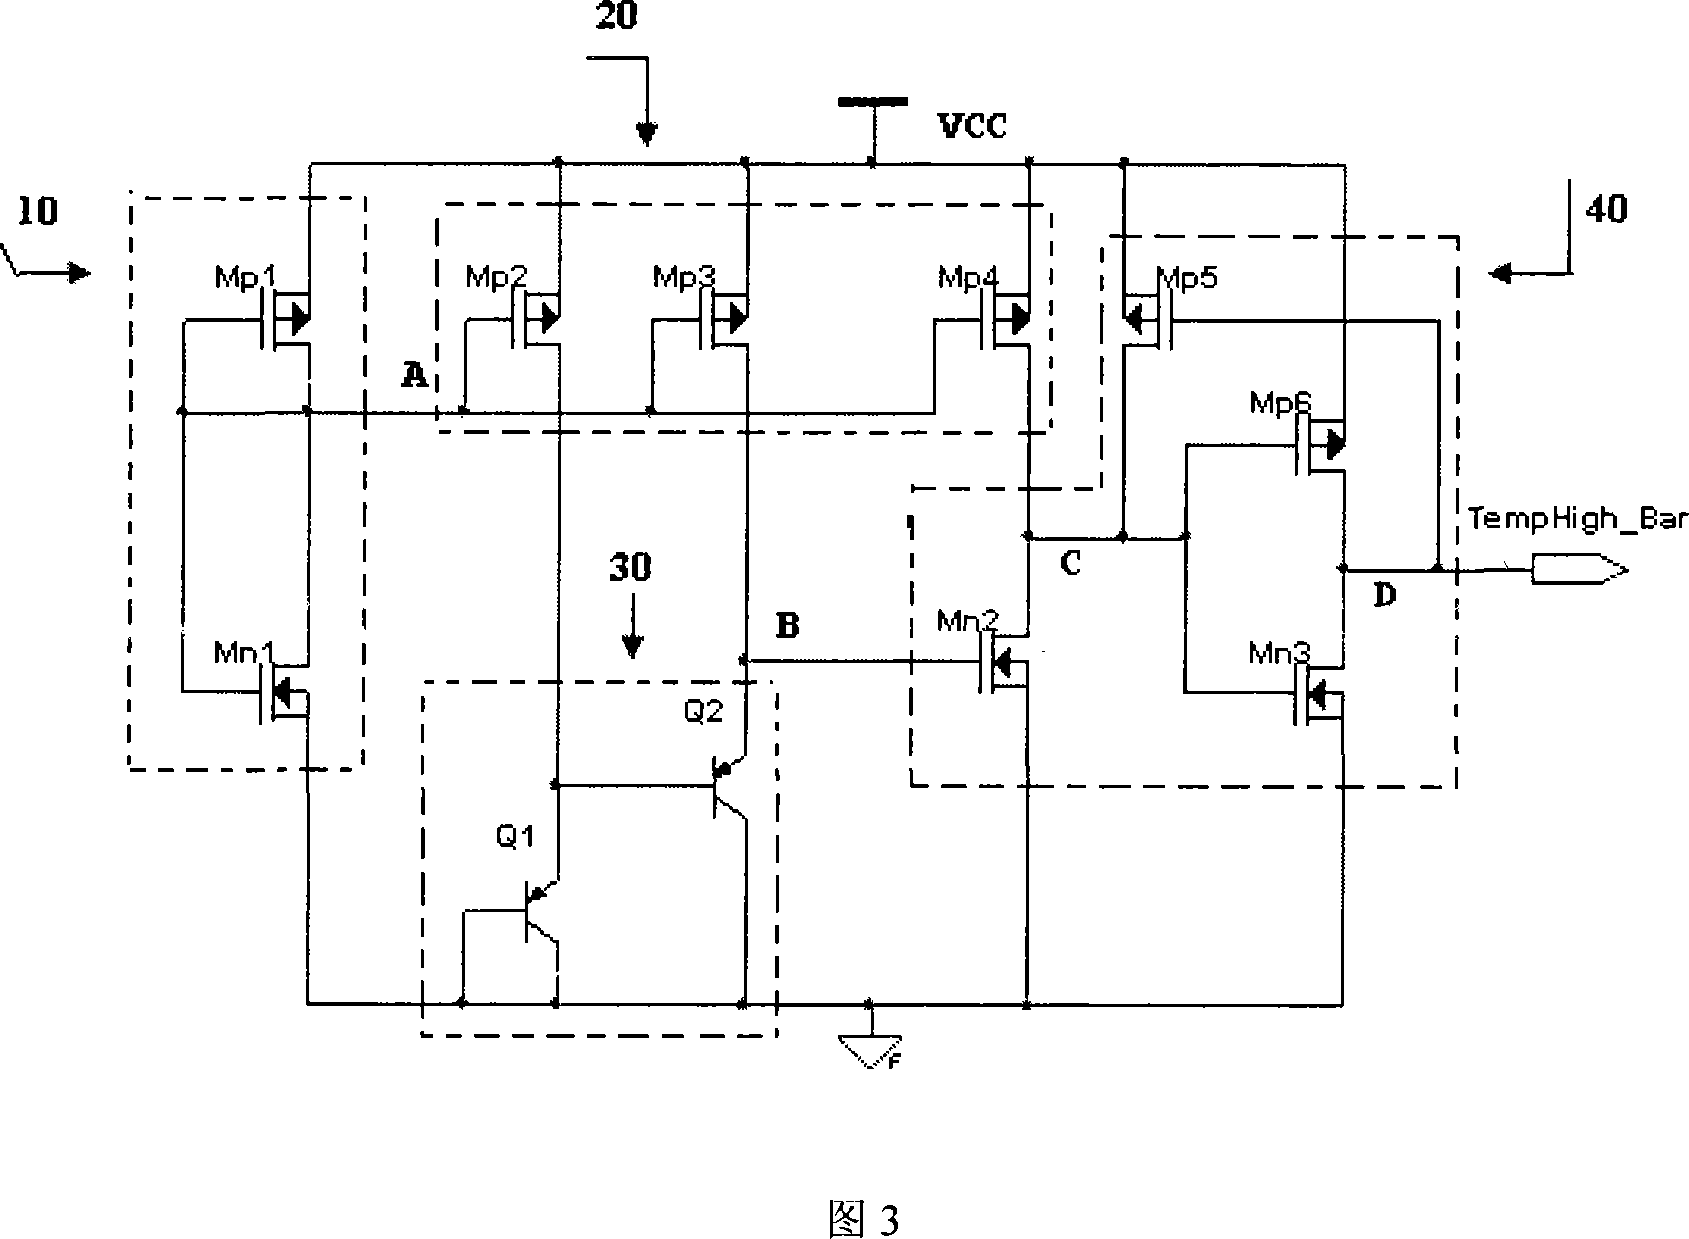 Temperature observation circuit